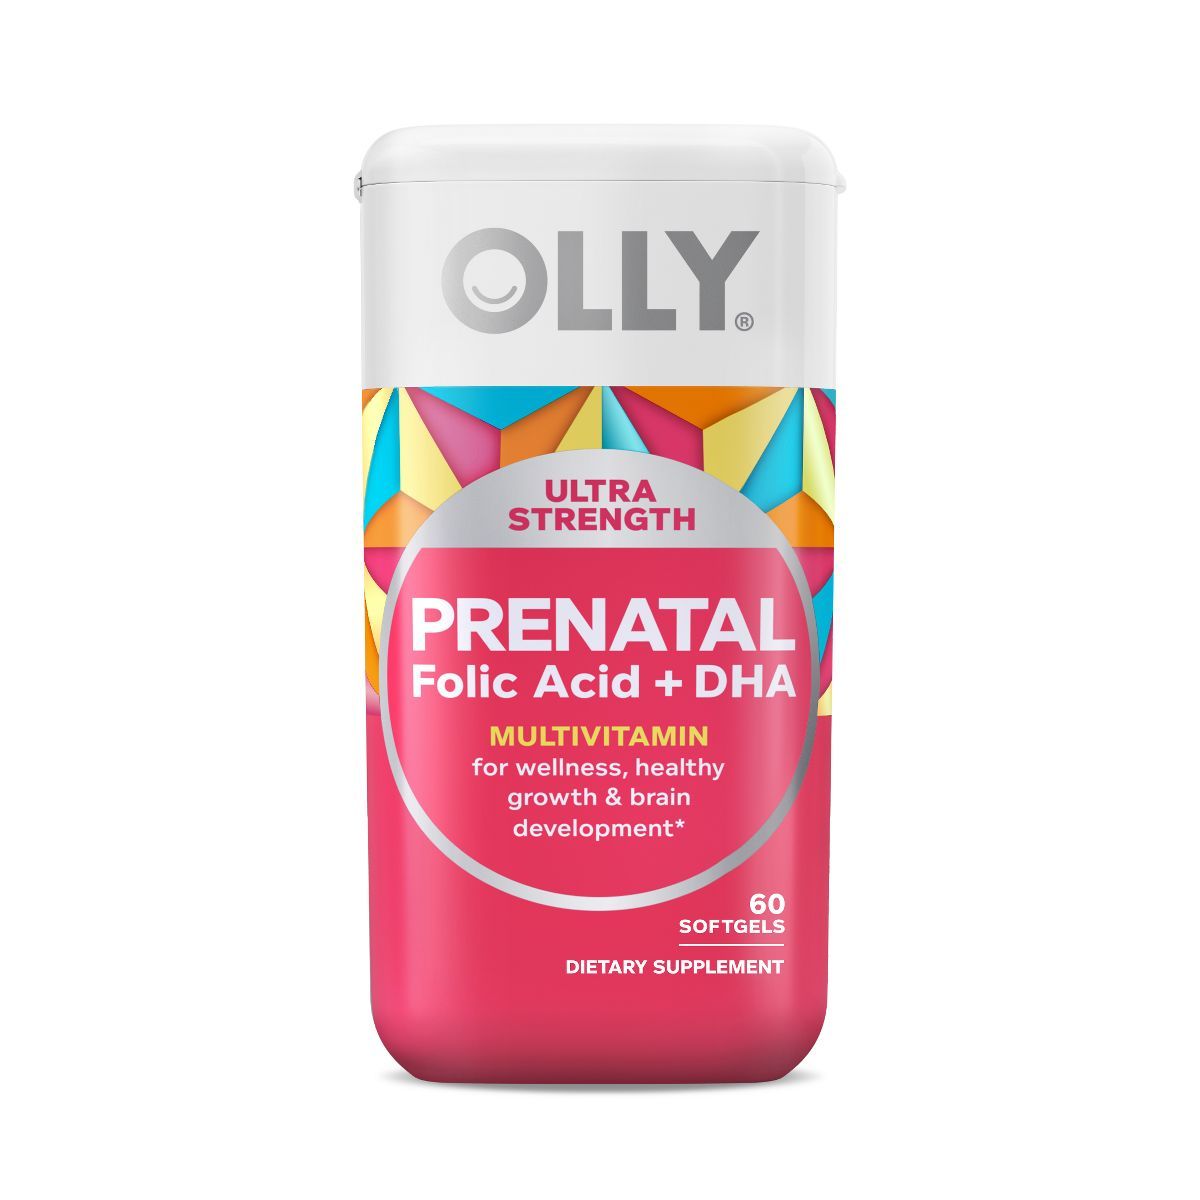 OLLY Ultra Strength Prenatal Multivitamin Softgels with Folic Acid + DHA - 60ct | Target